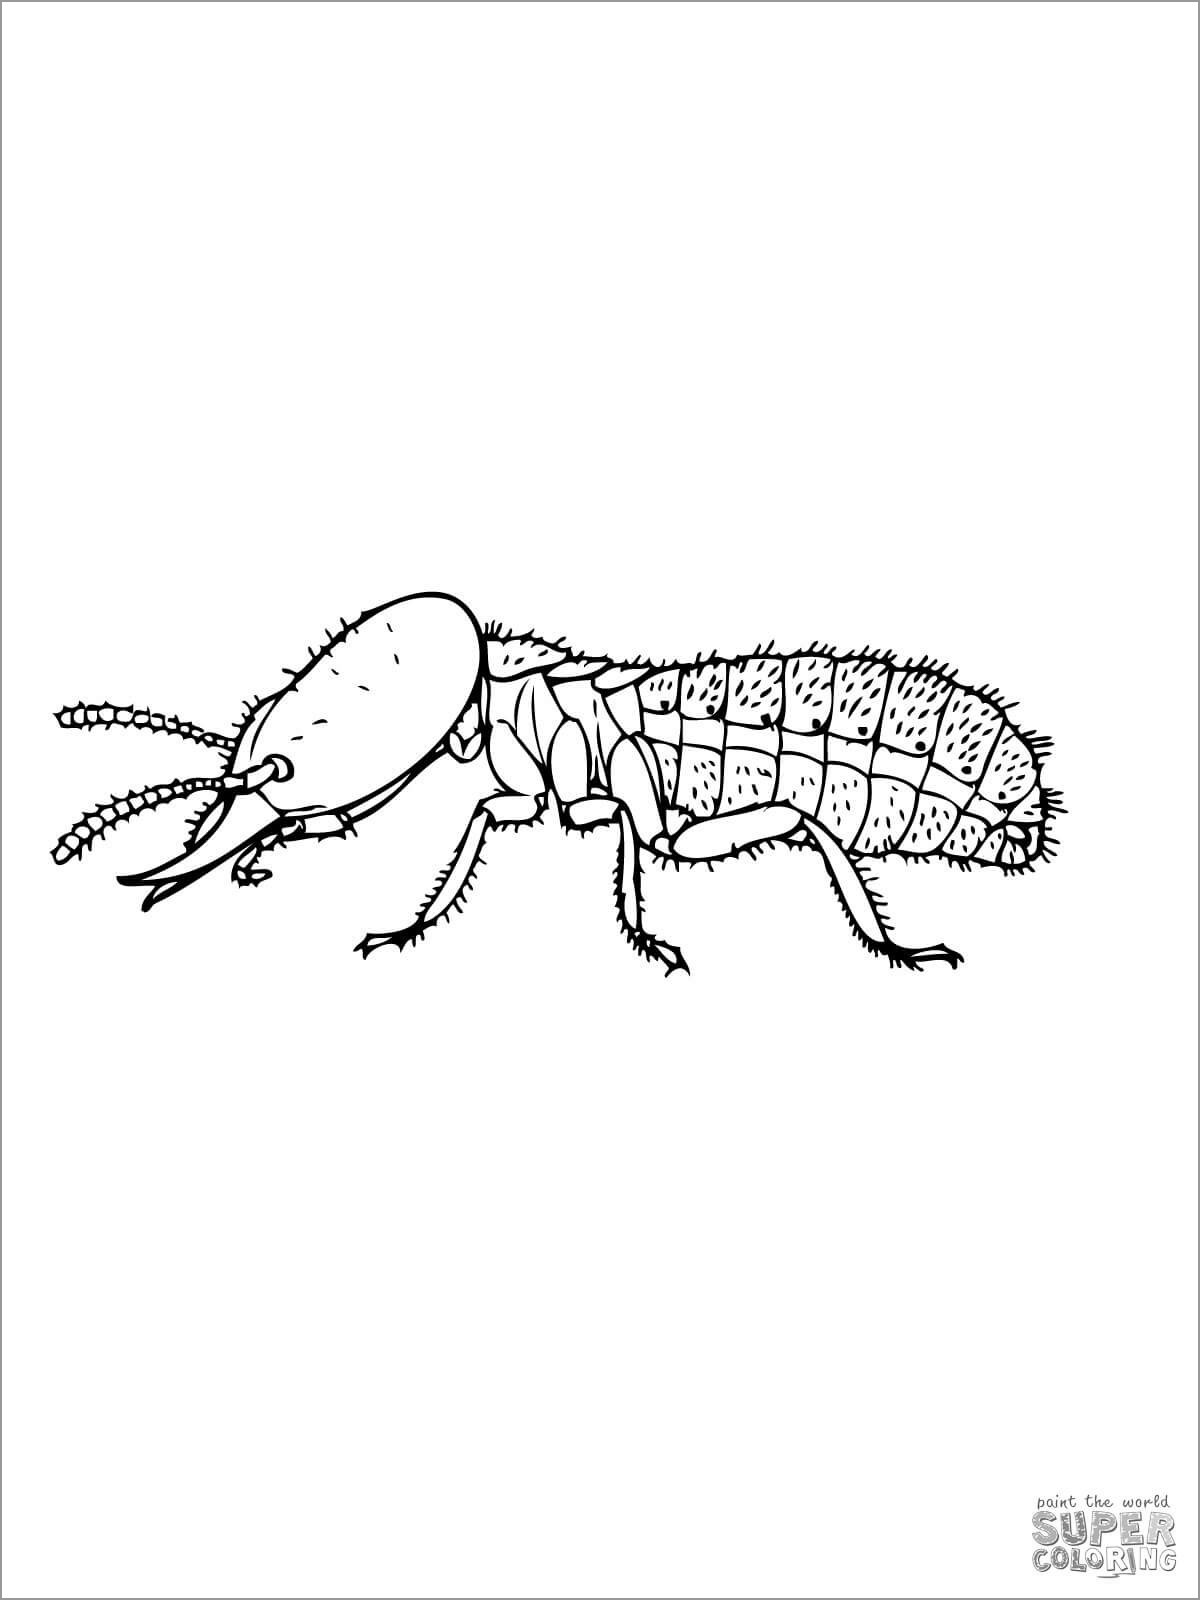 Eastern Subterranean Termite Coloring Page